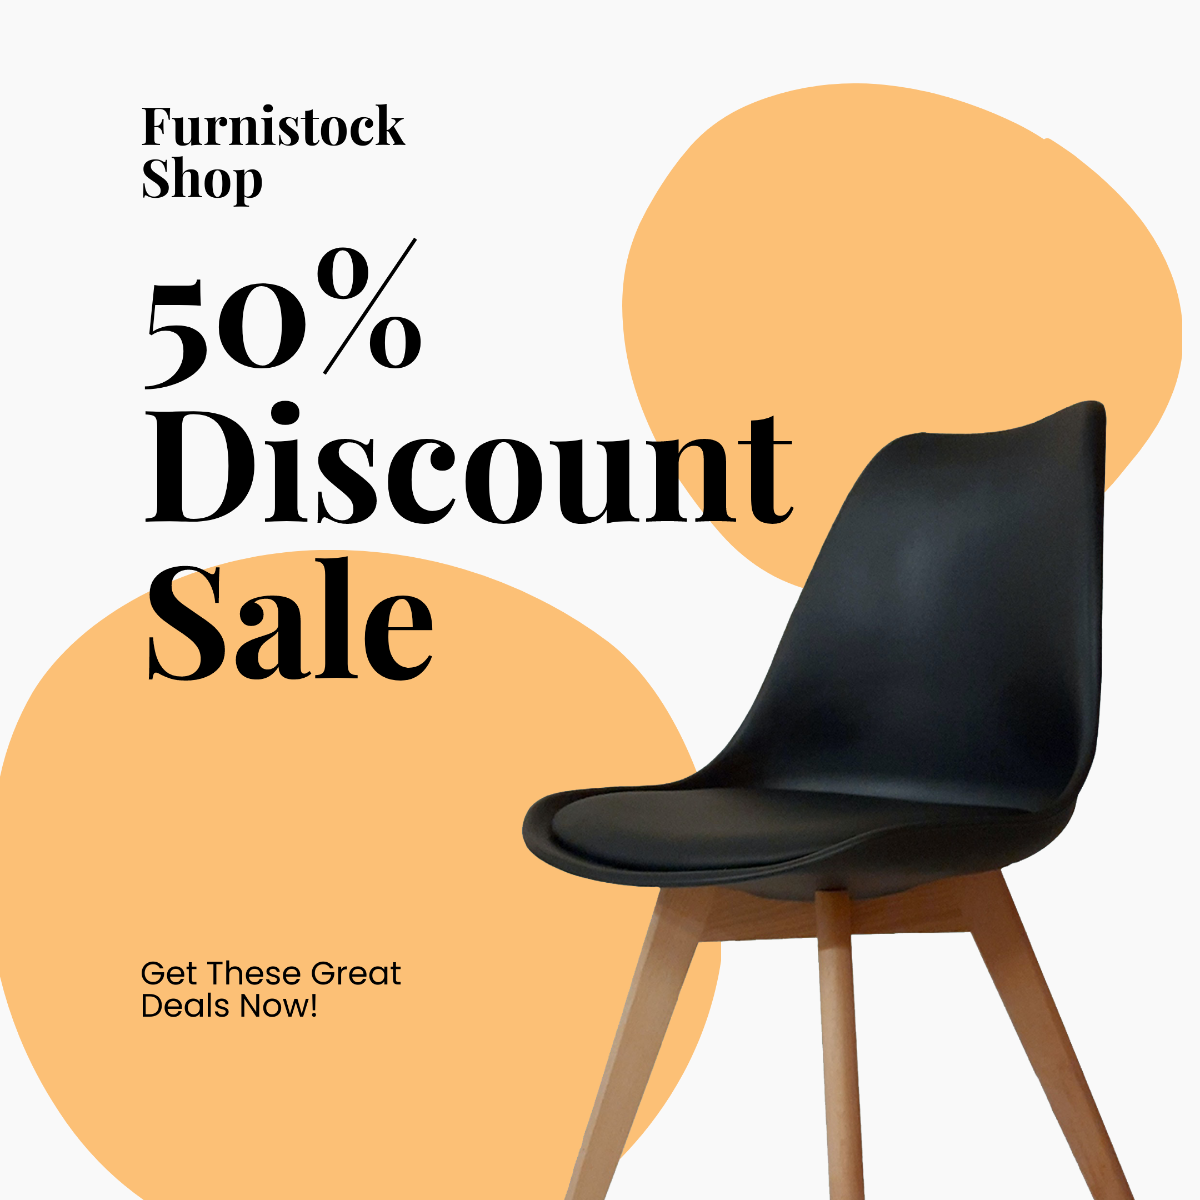 Furniture Sale Instagram Post